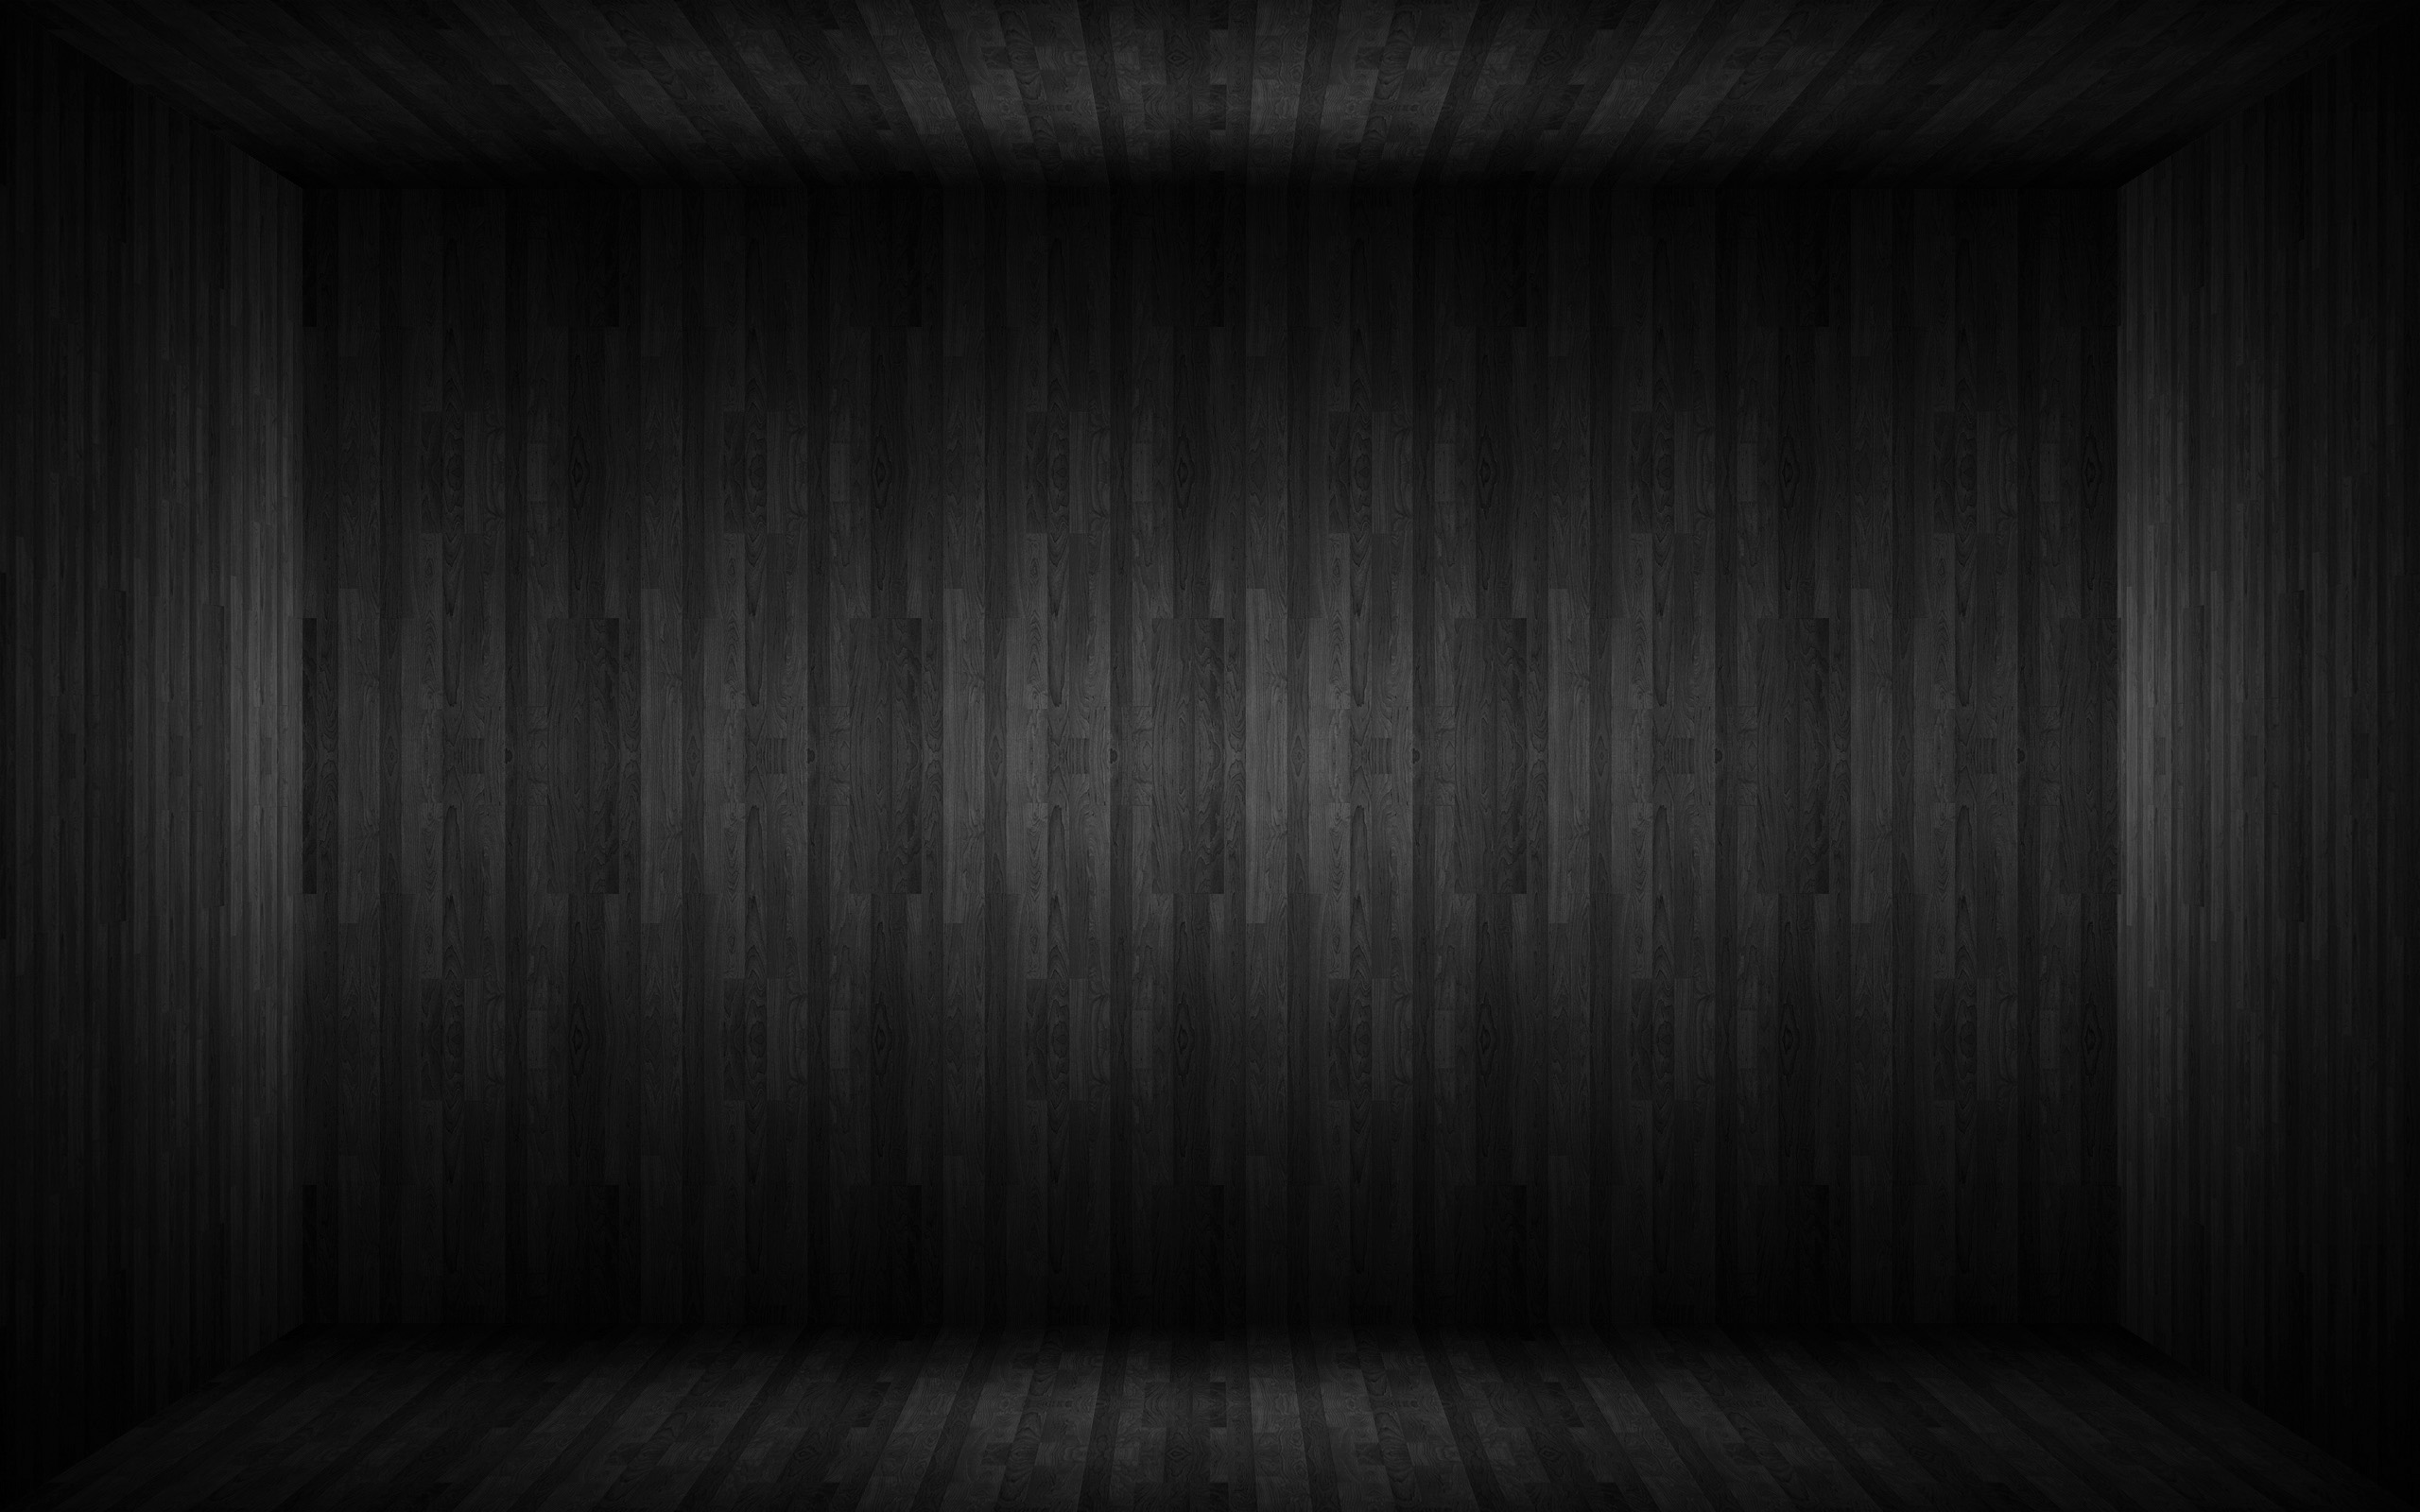 Black Wood Wallpaper 3d This